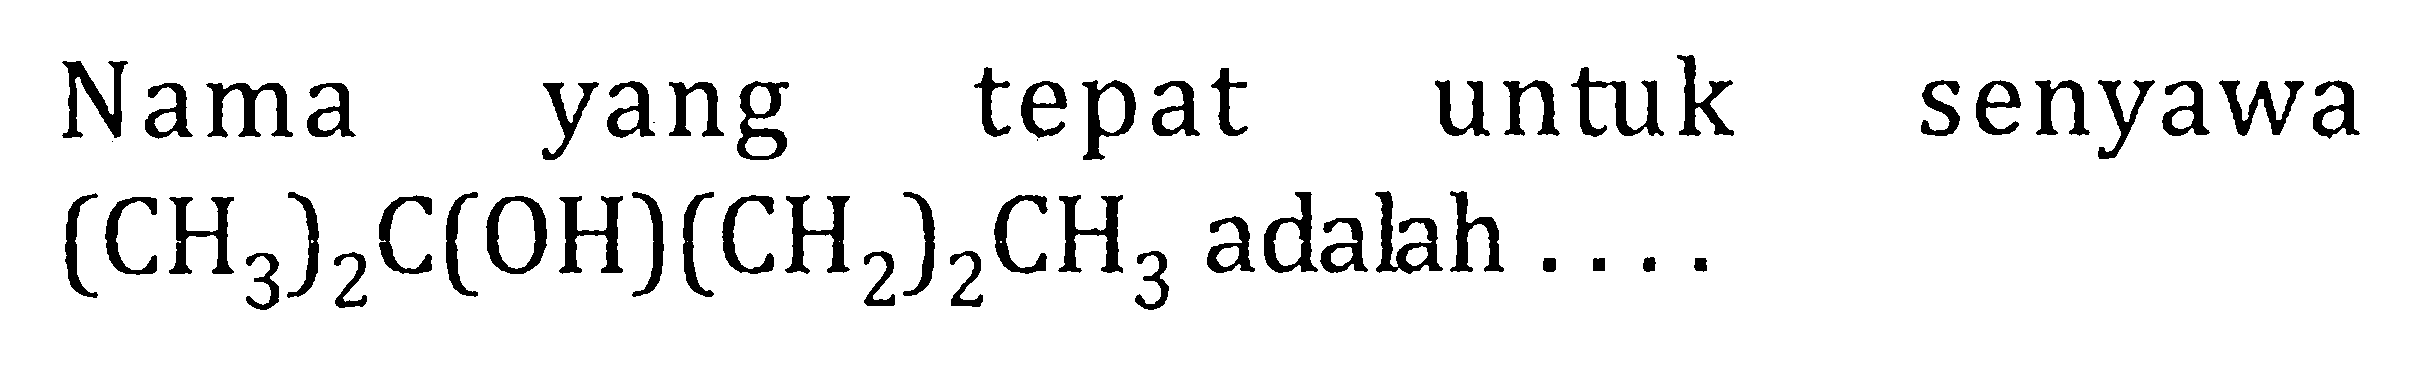 Nama yang tepat untuk senyawa  (CH3)2 C(OH)(CH2)2 CH3  adalah  ....  